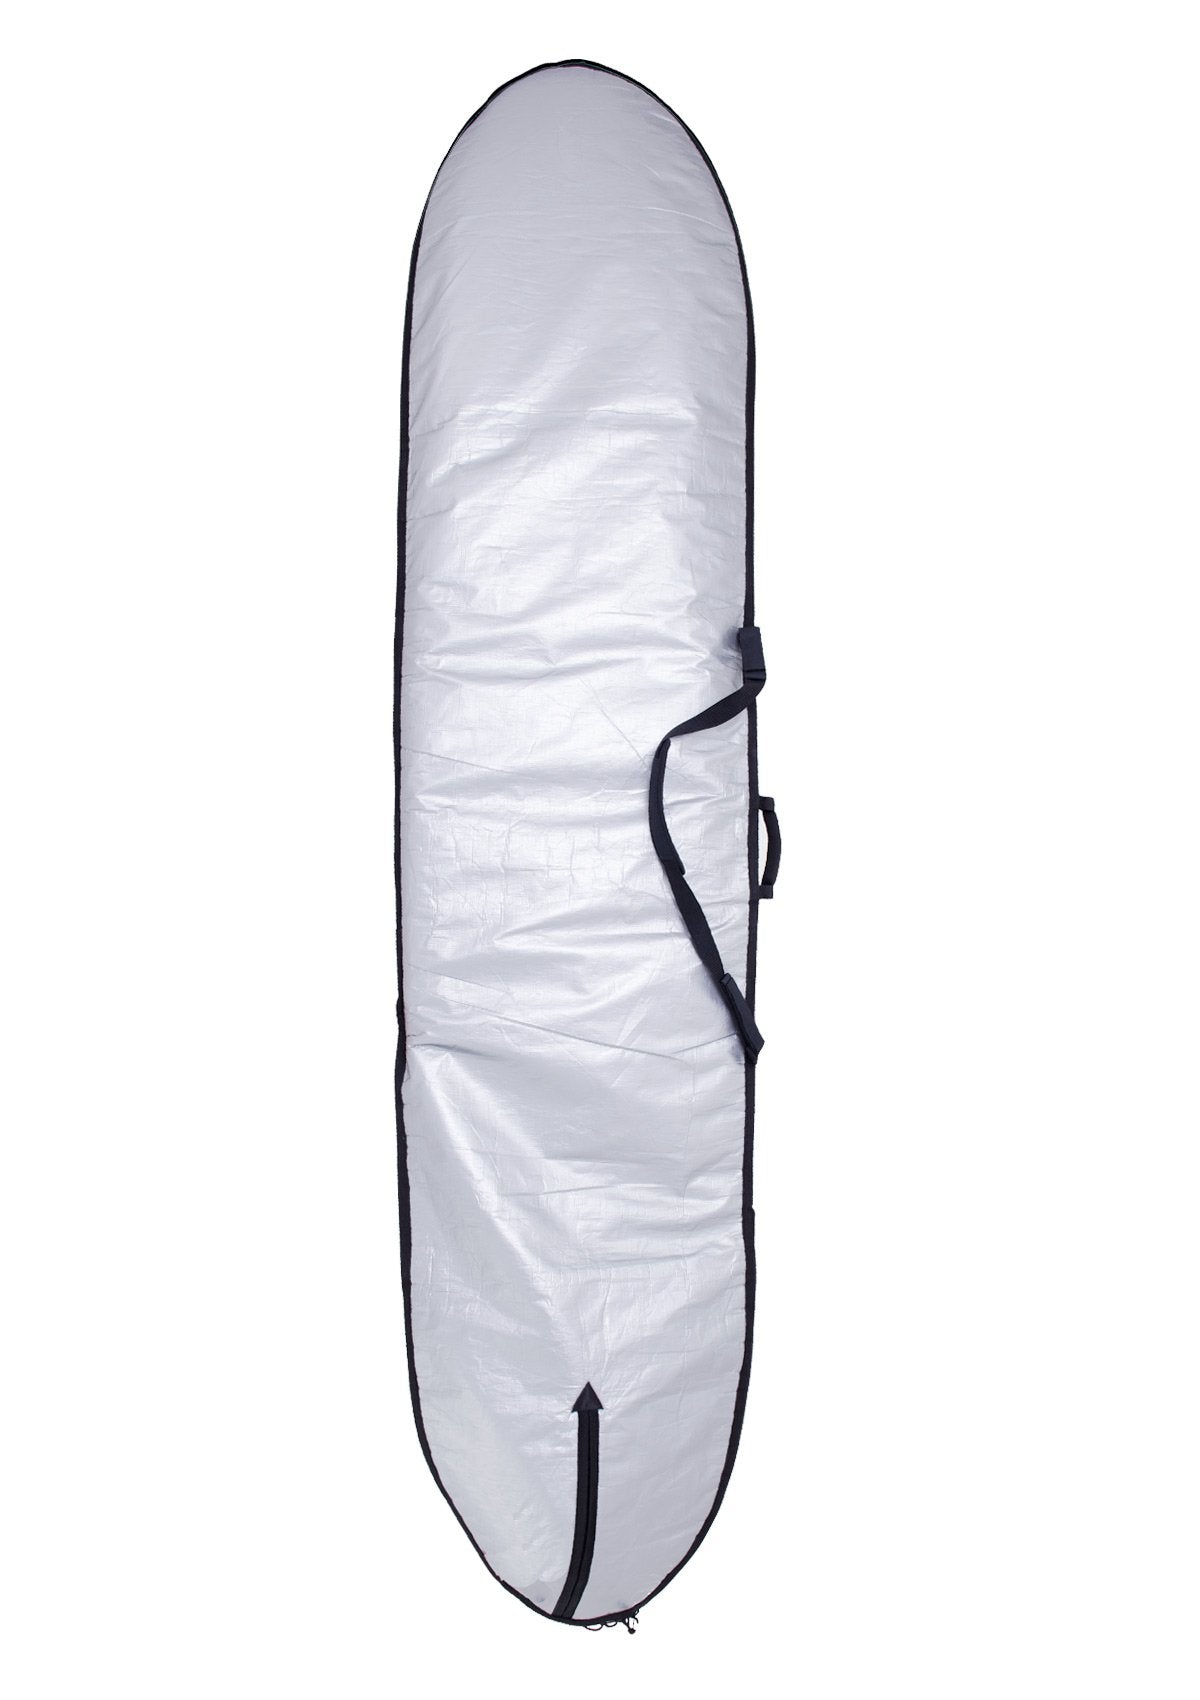 needessentials travel long board cover boardbag board bag surfing